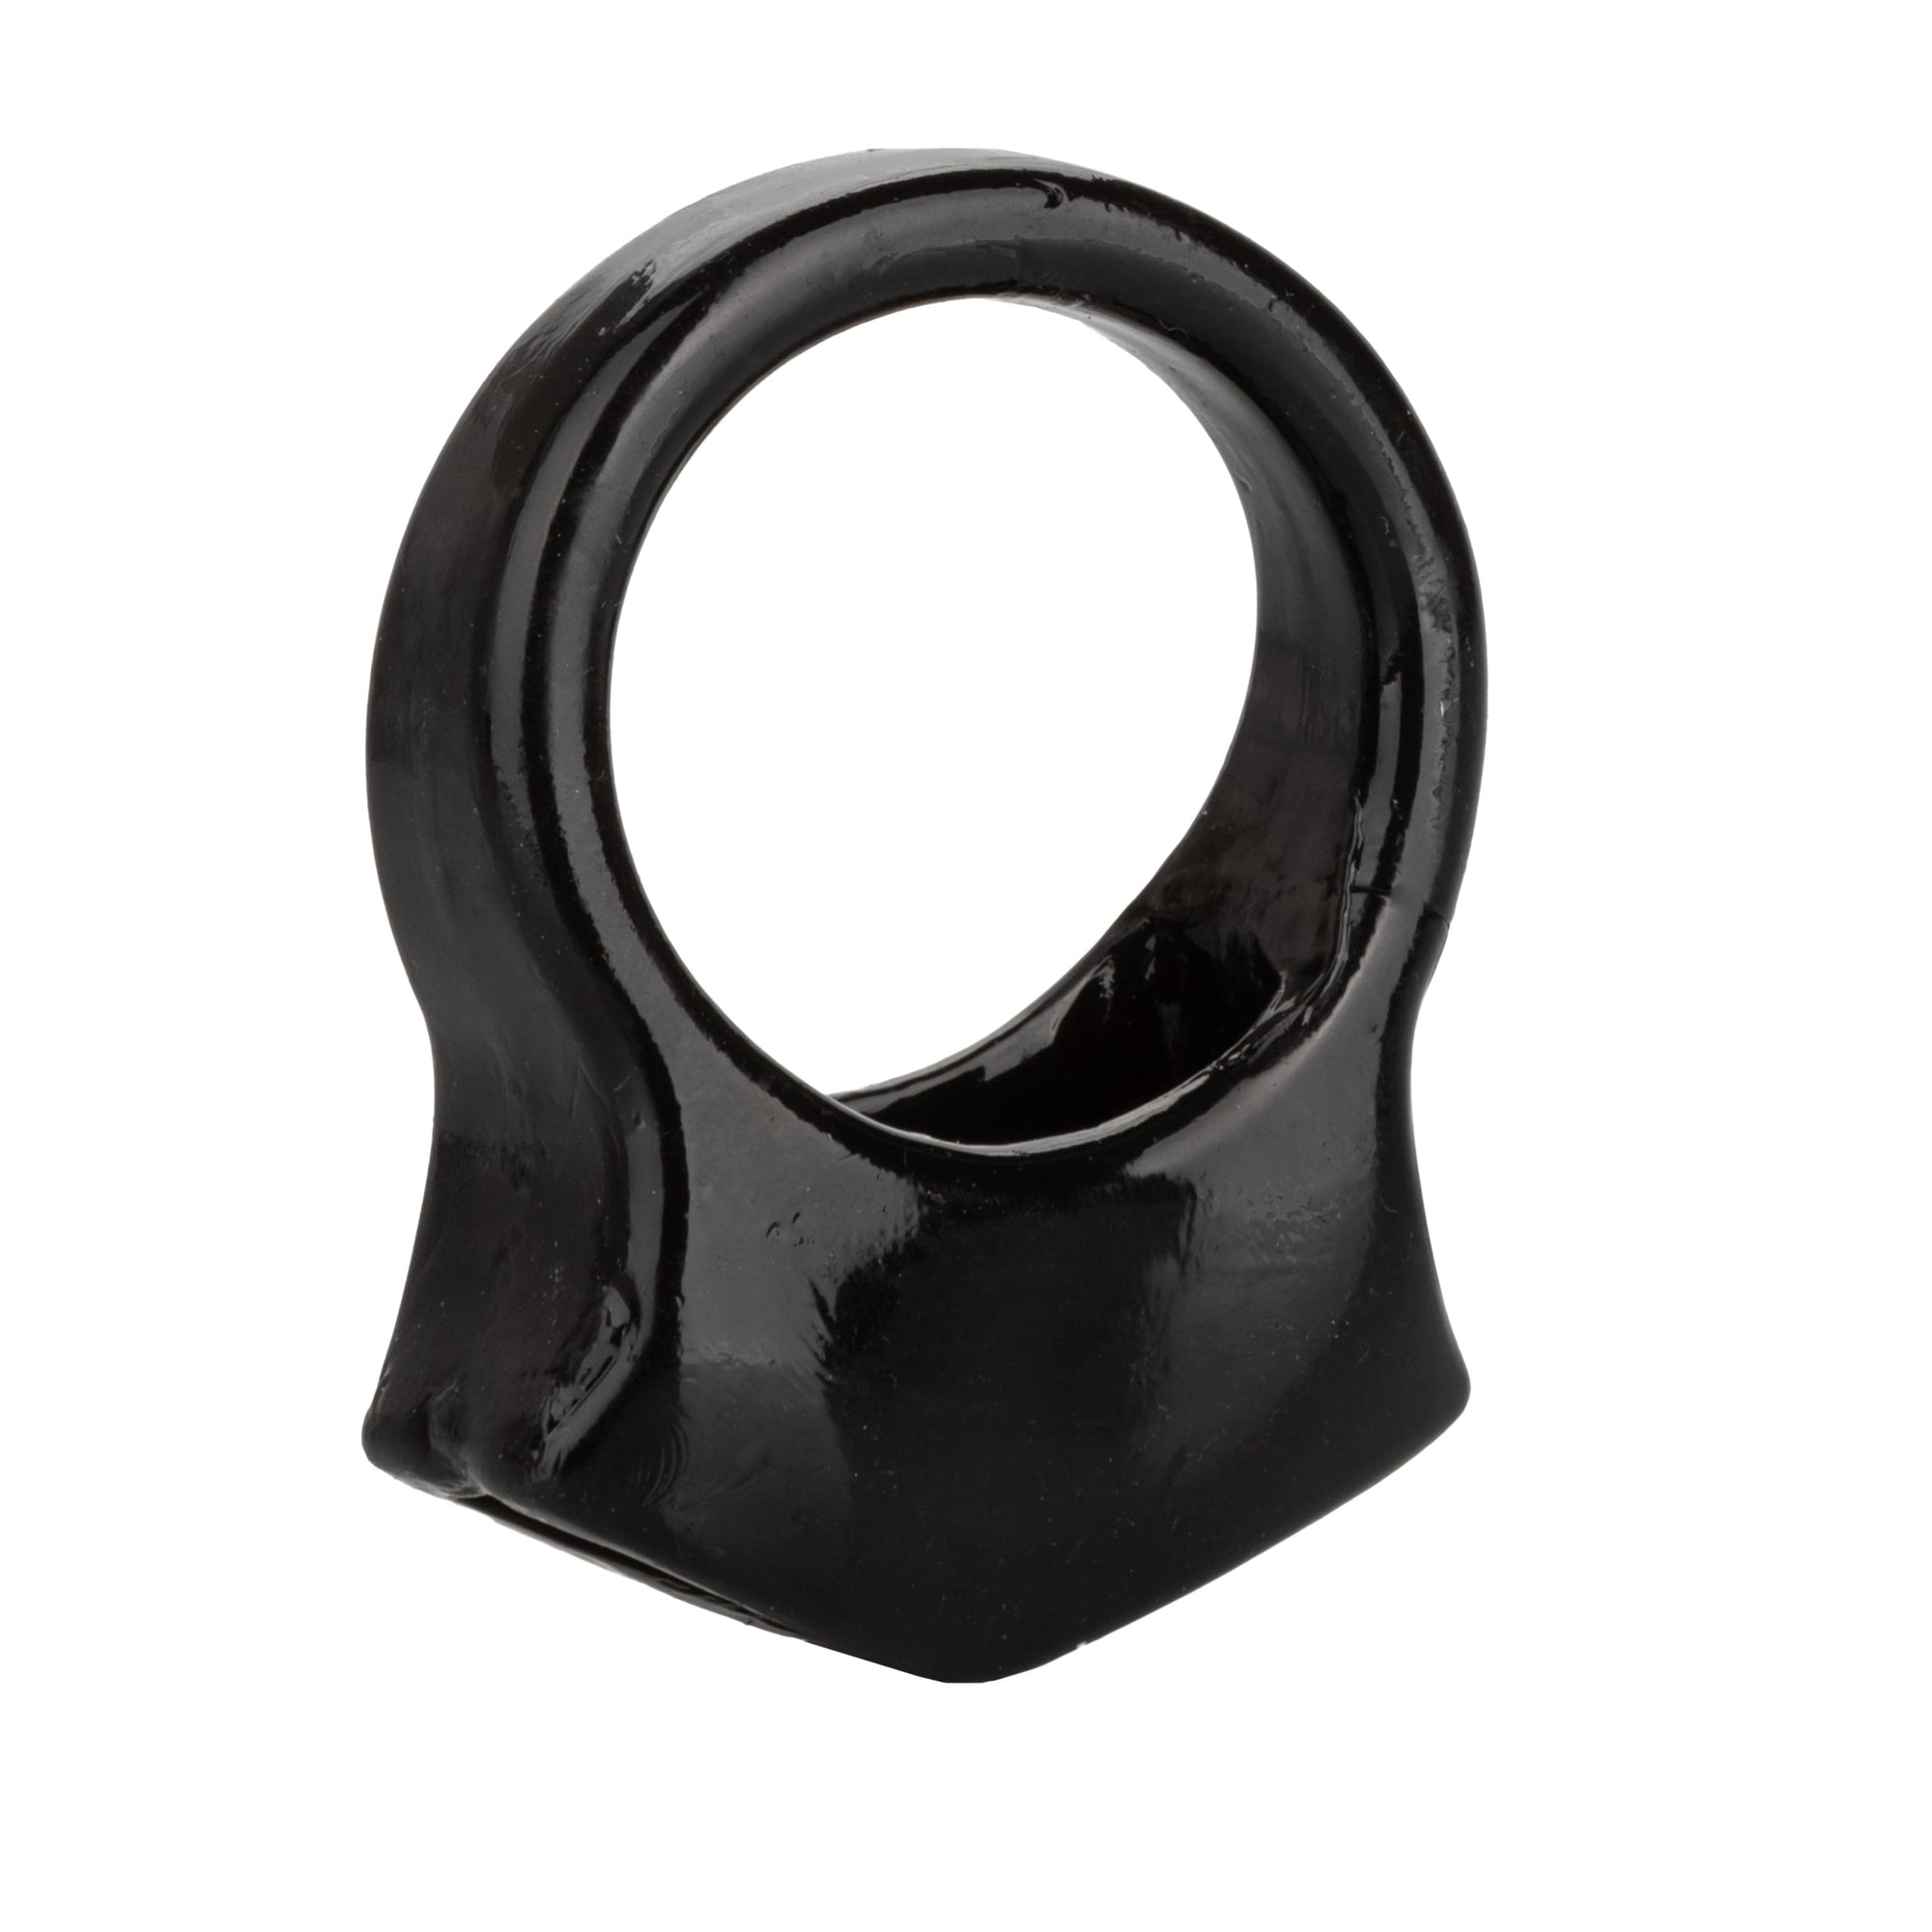 California Exotics - COLT Snug Grip Dual Support Cock Ring (Black) Rubber Cock Ring (Non Vibration) 620049509 CherryAffairs